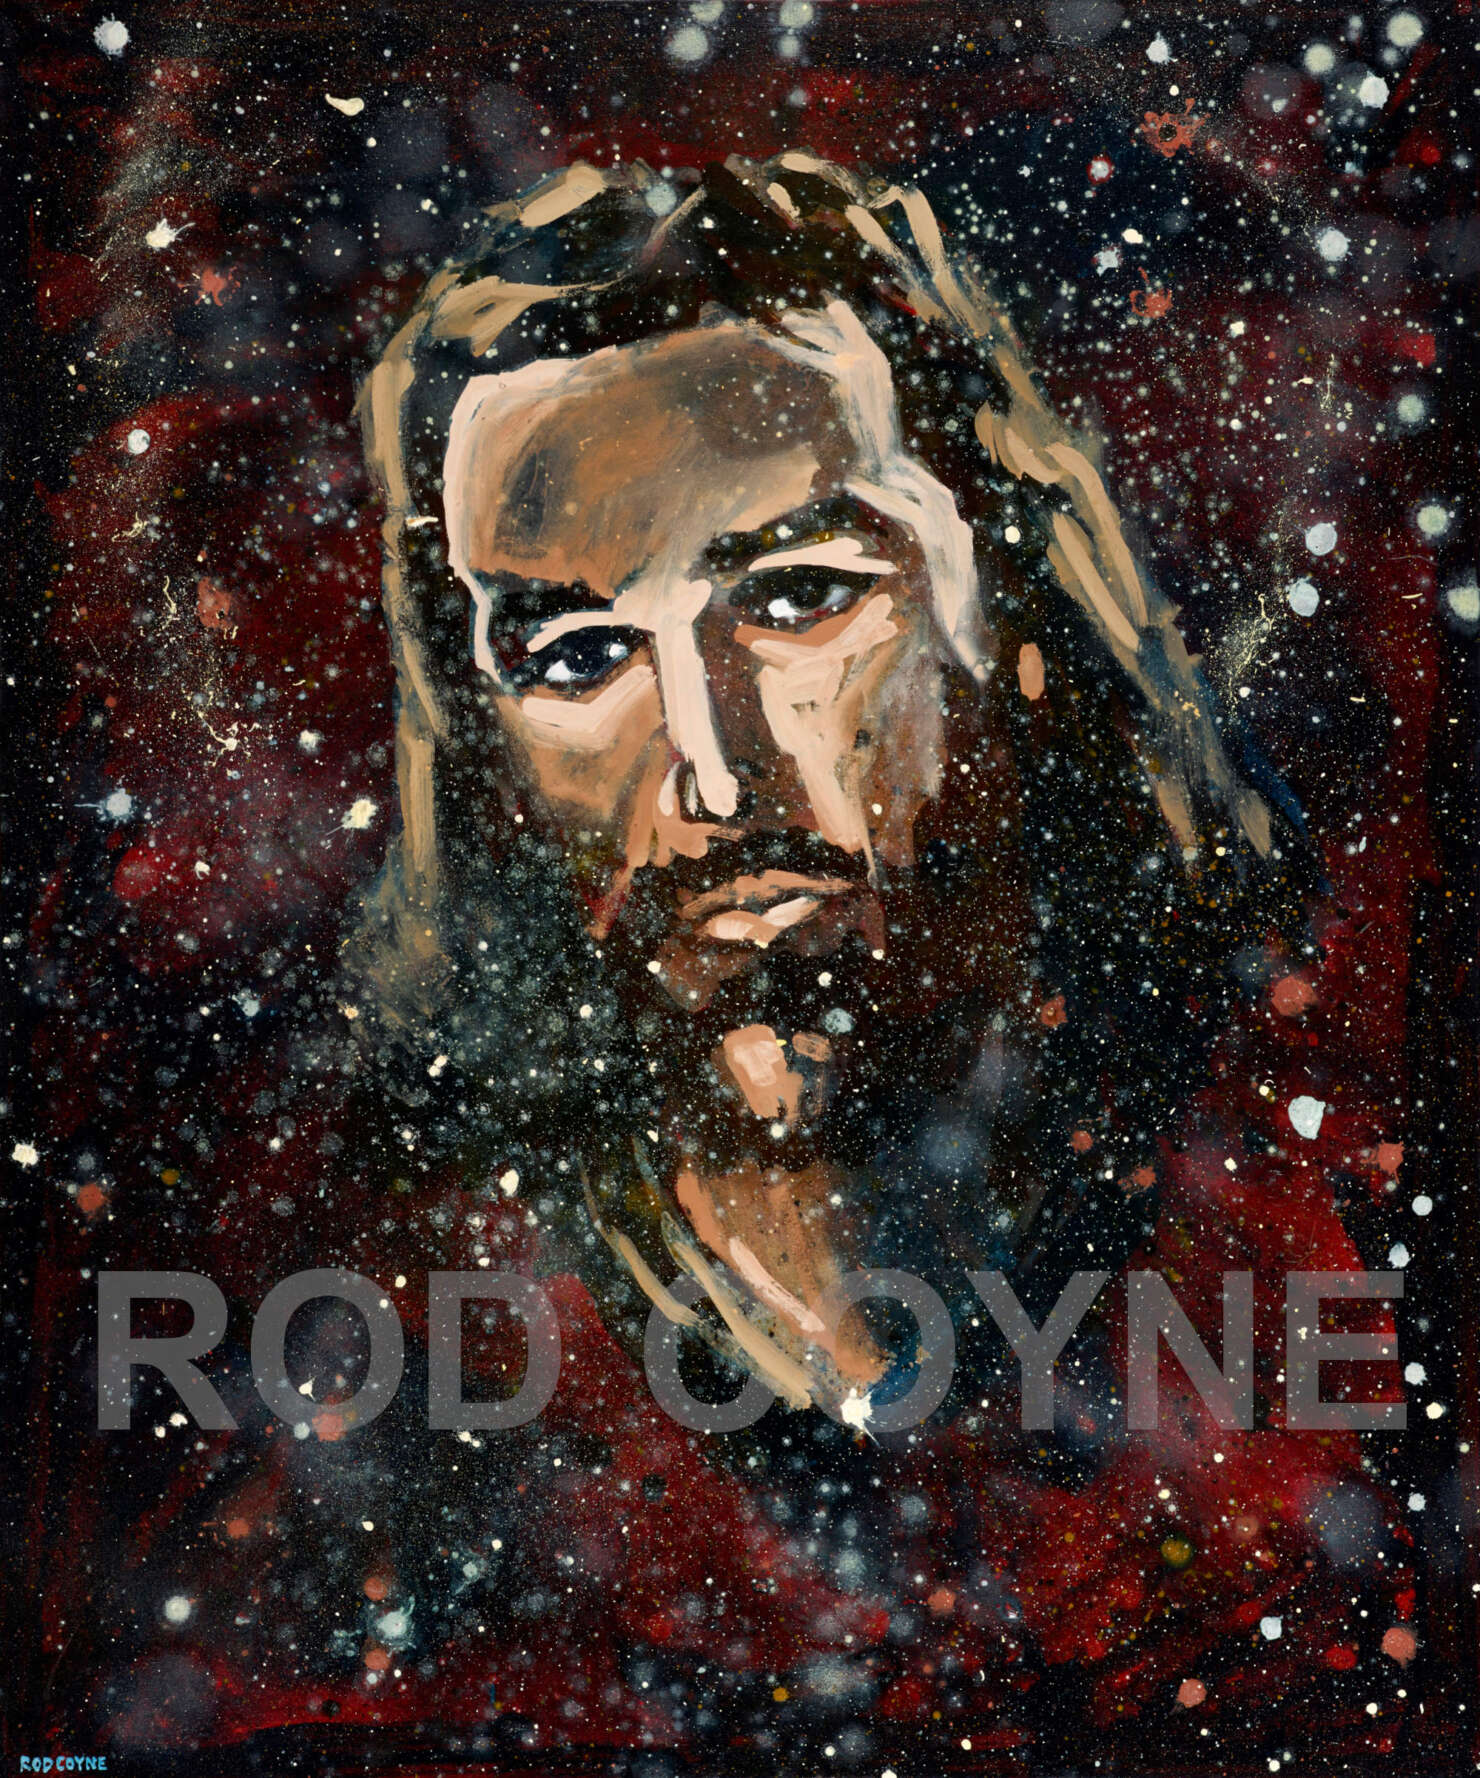 artist rod coyne's portrait "jesus" is shown here, watermarked